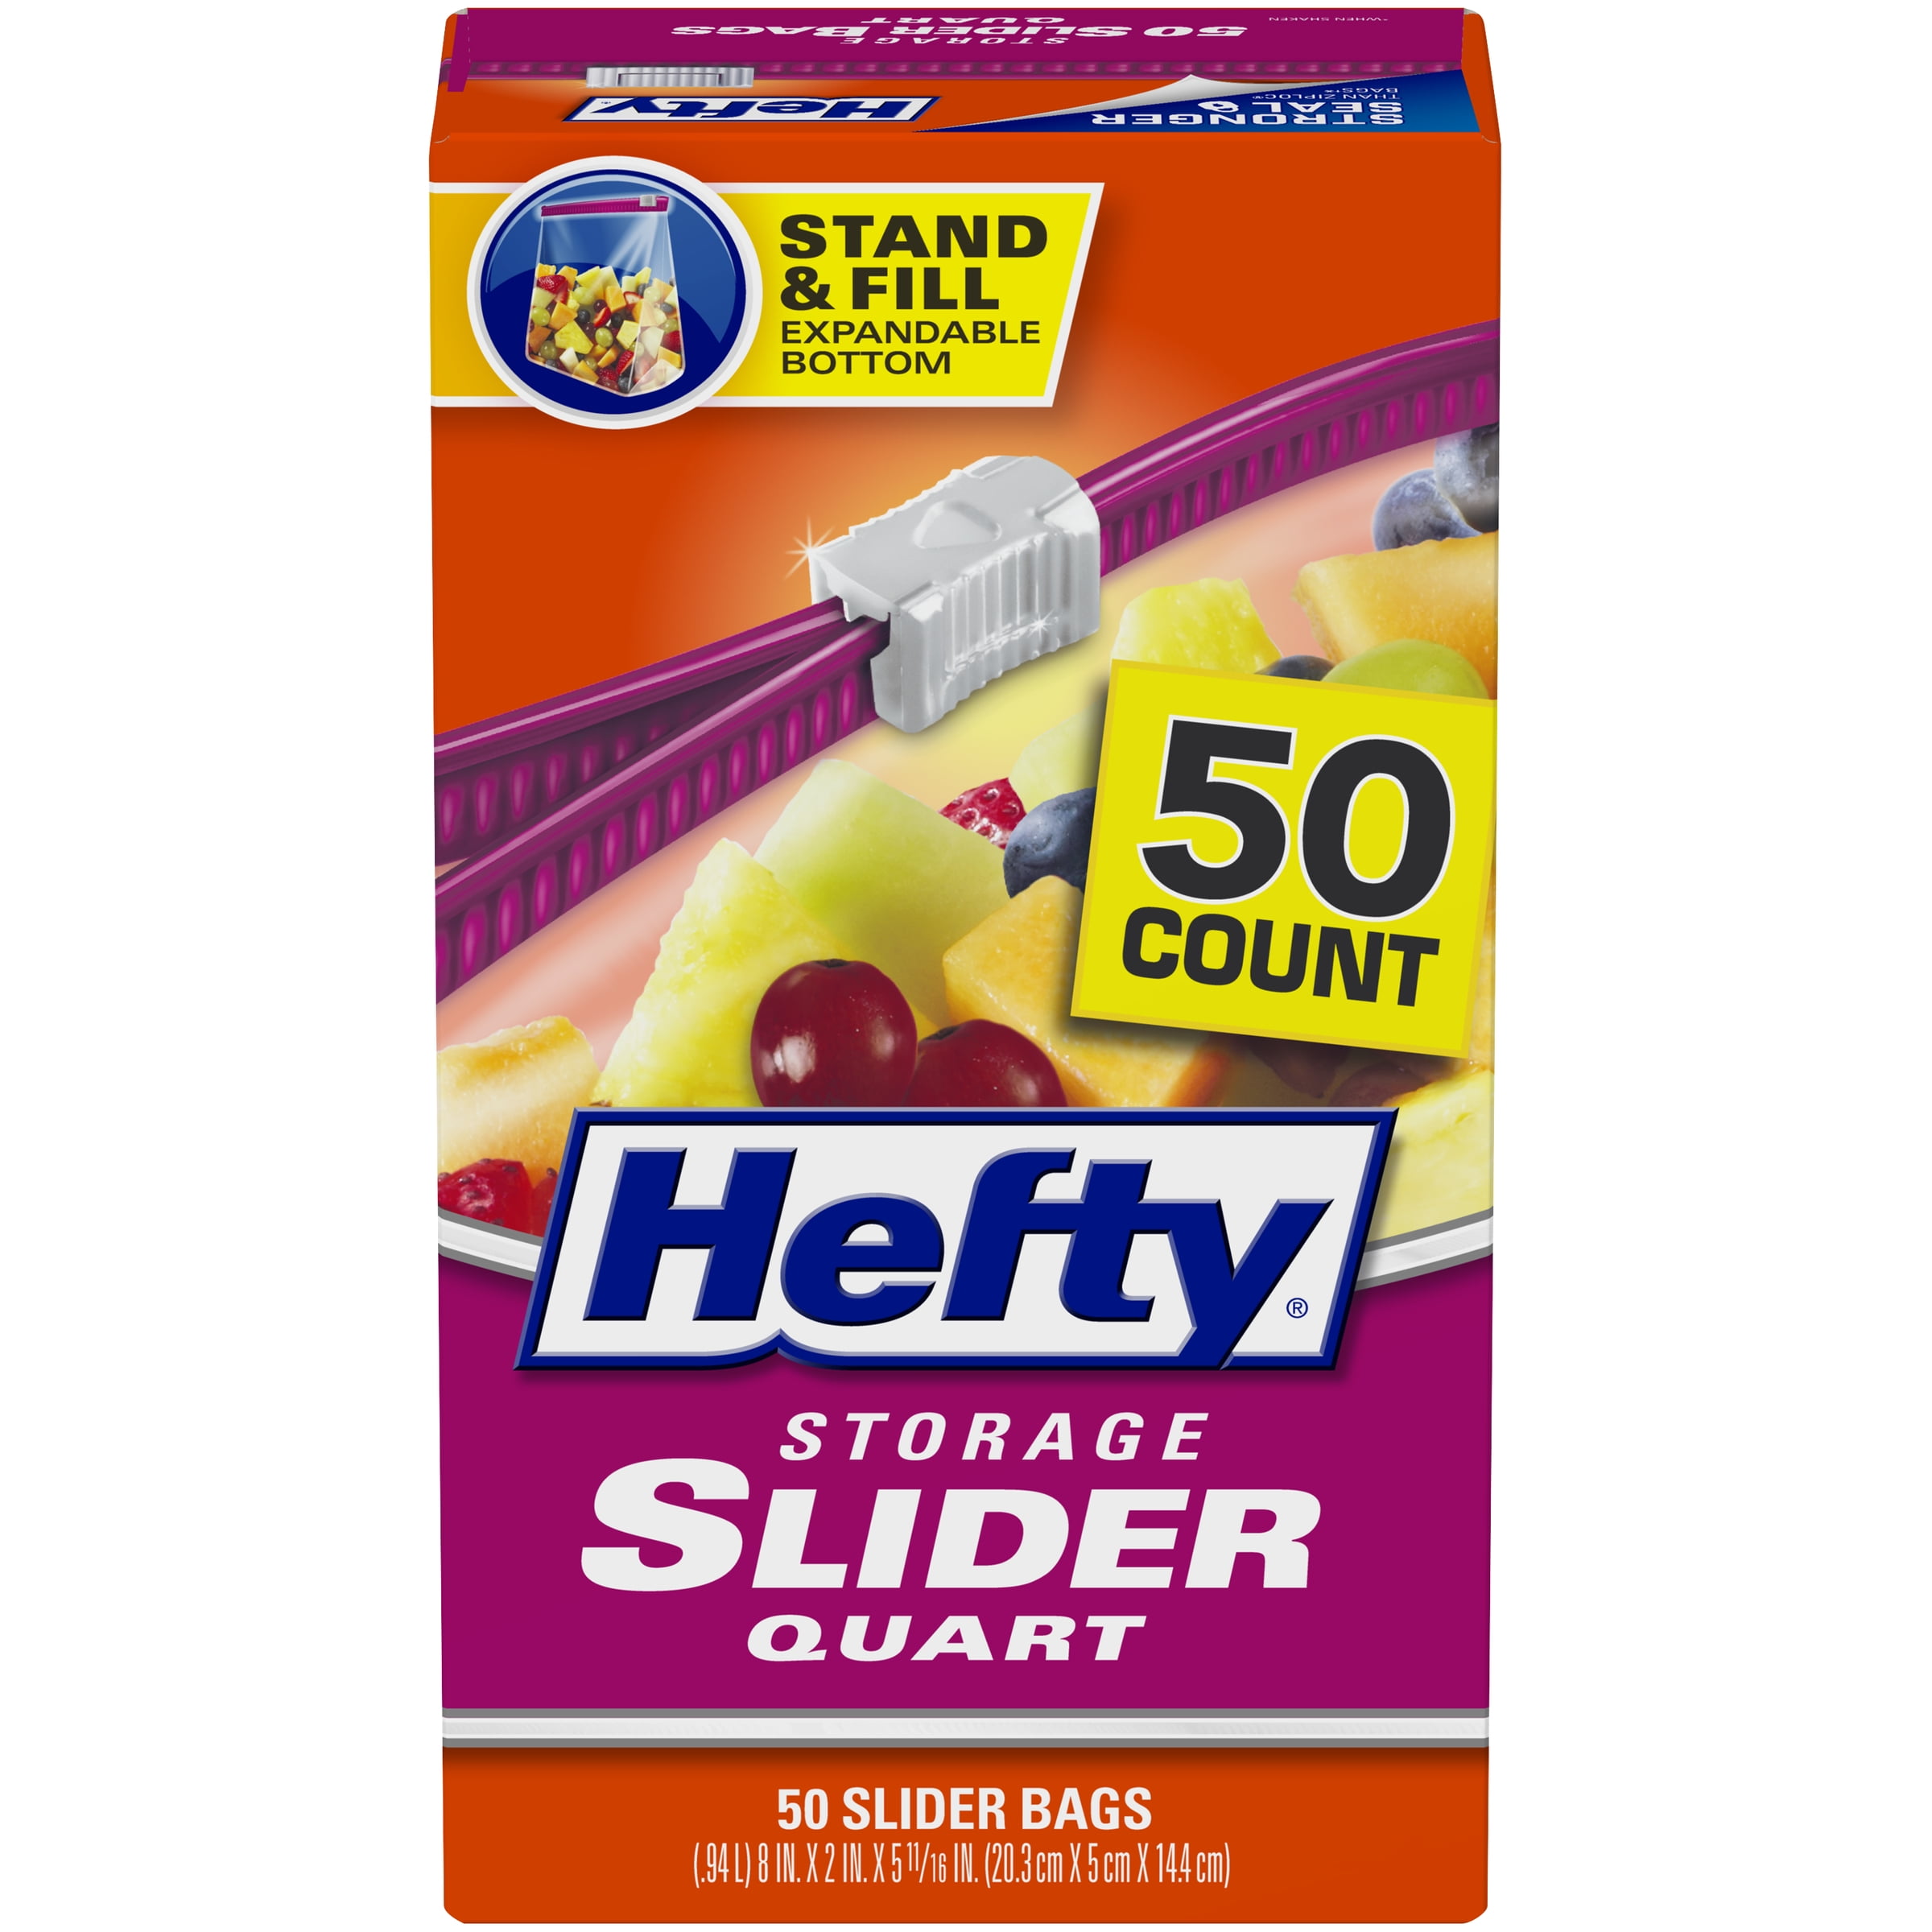 Hefty Slider Storage Bags, Quart Size, 50 Count